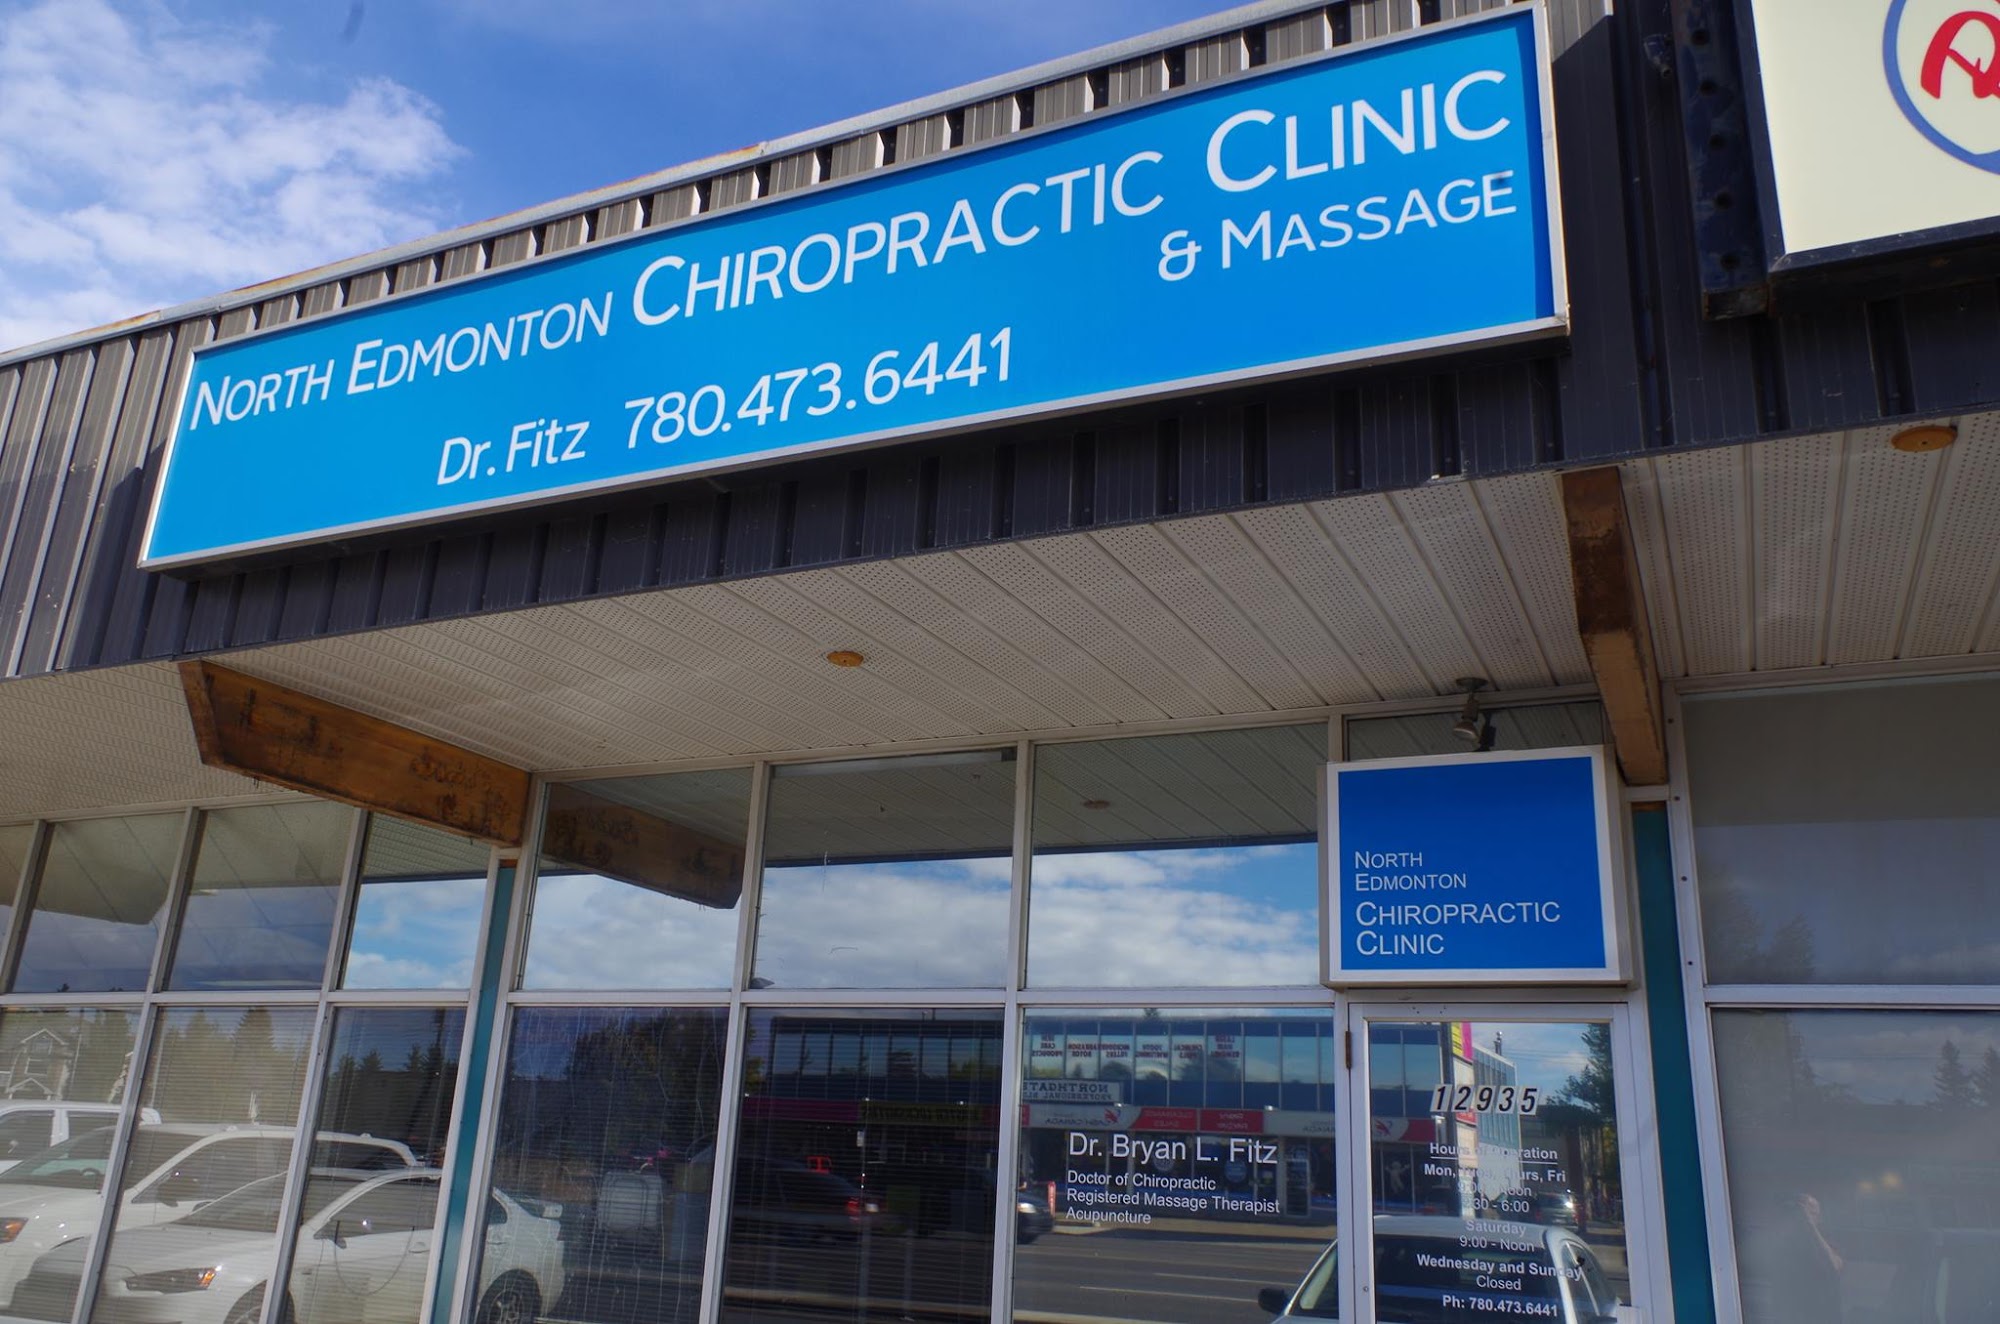 North Edmonton Chiropractic & Massage Clinic